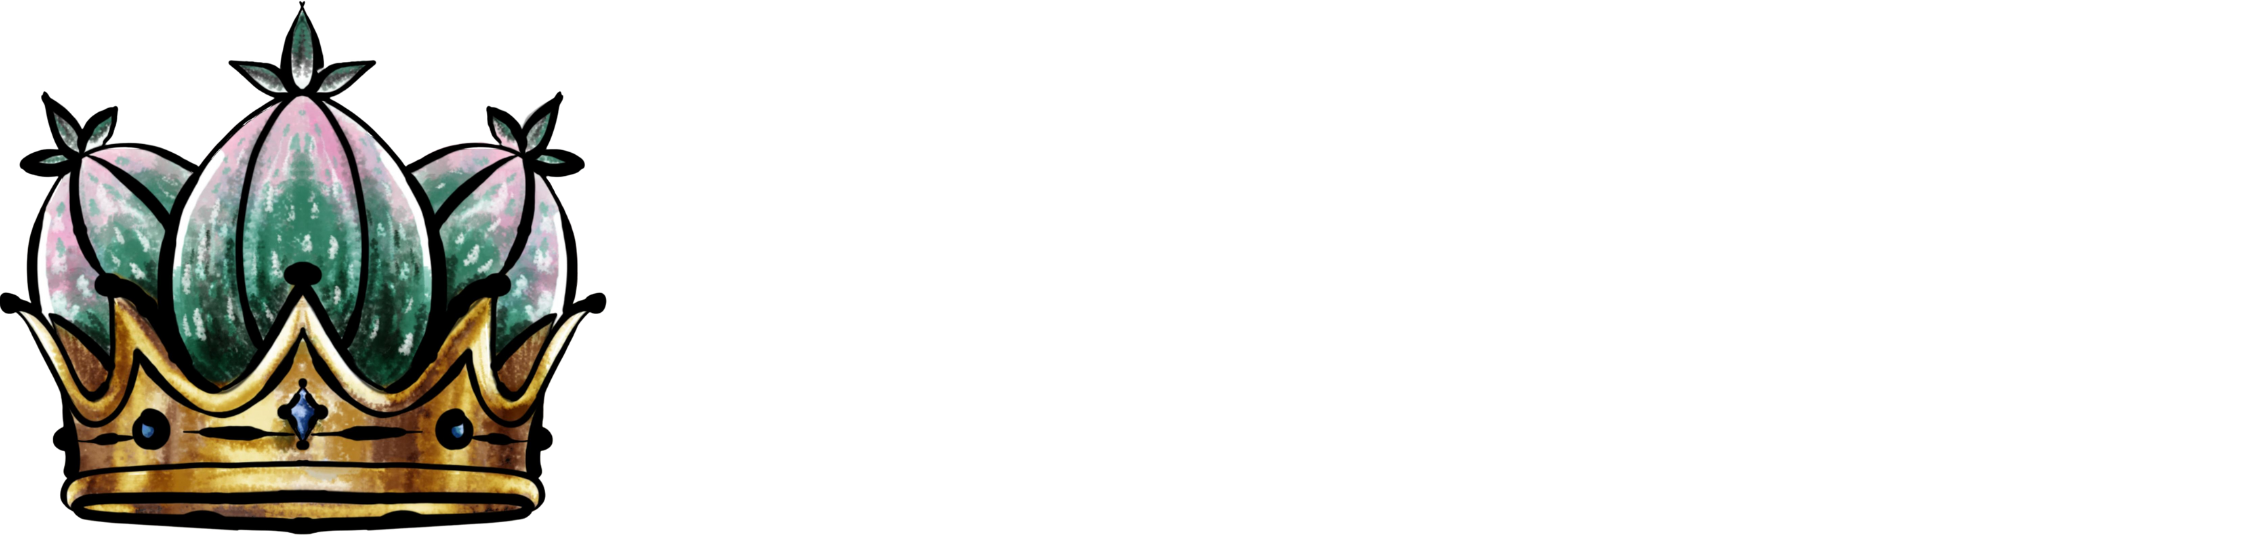 Desert Crown Theater Company